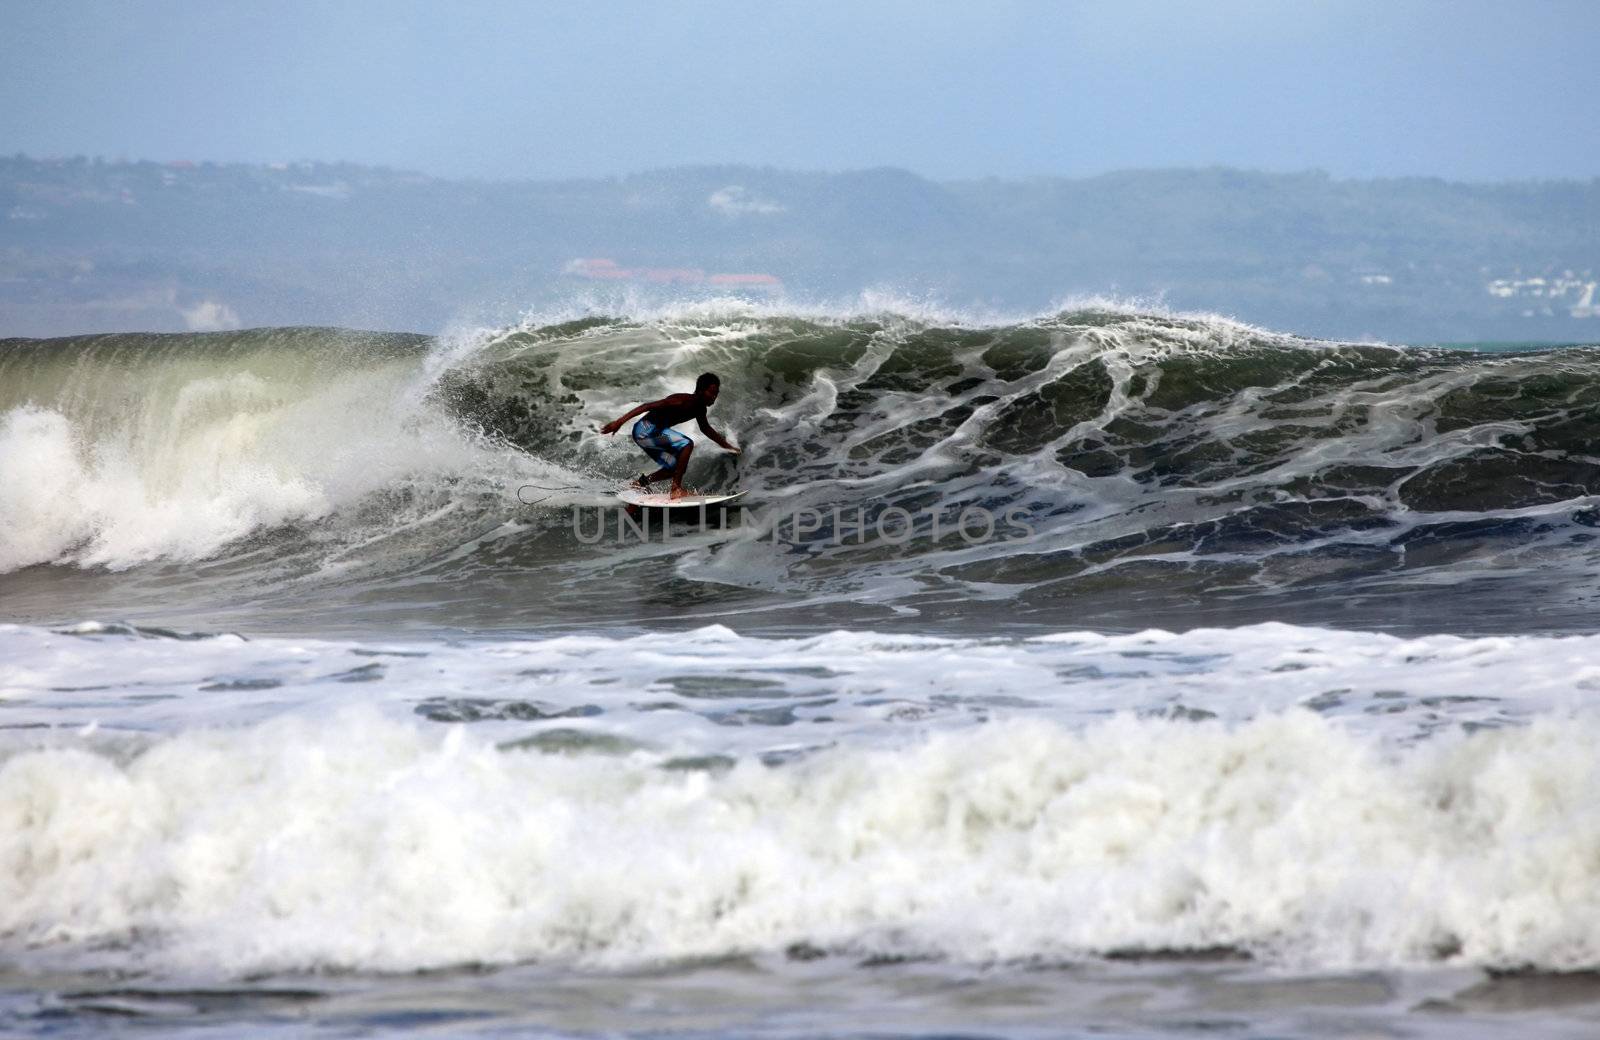 Surfer in ocean by friday